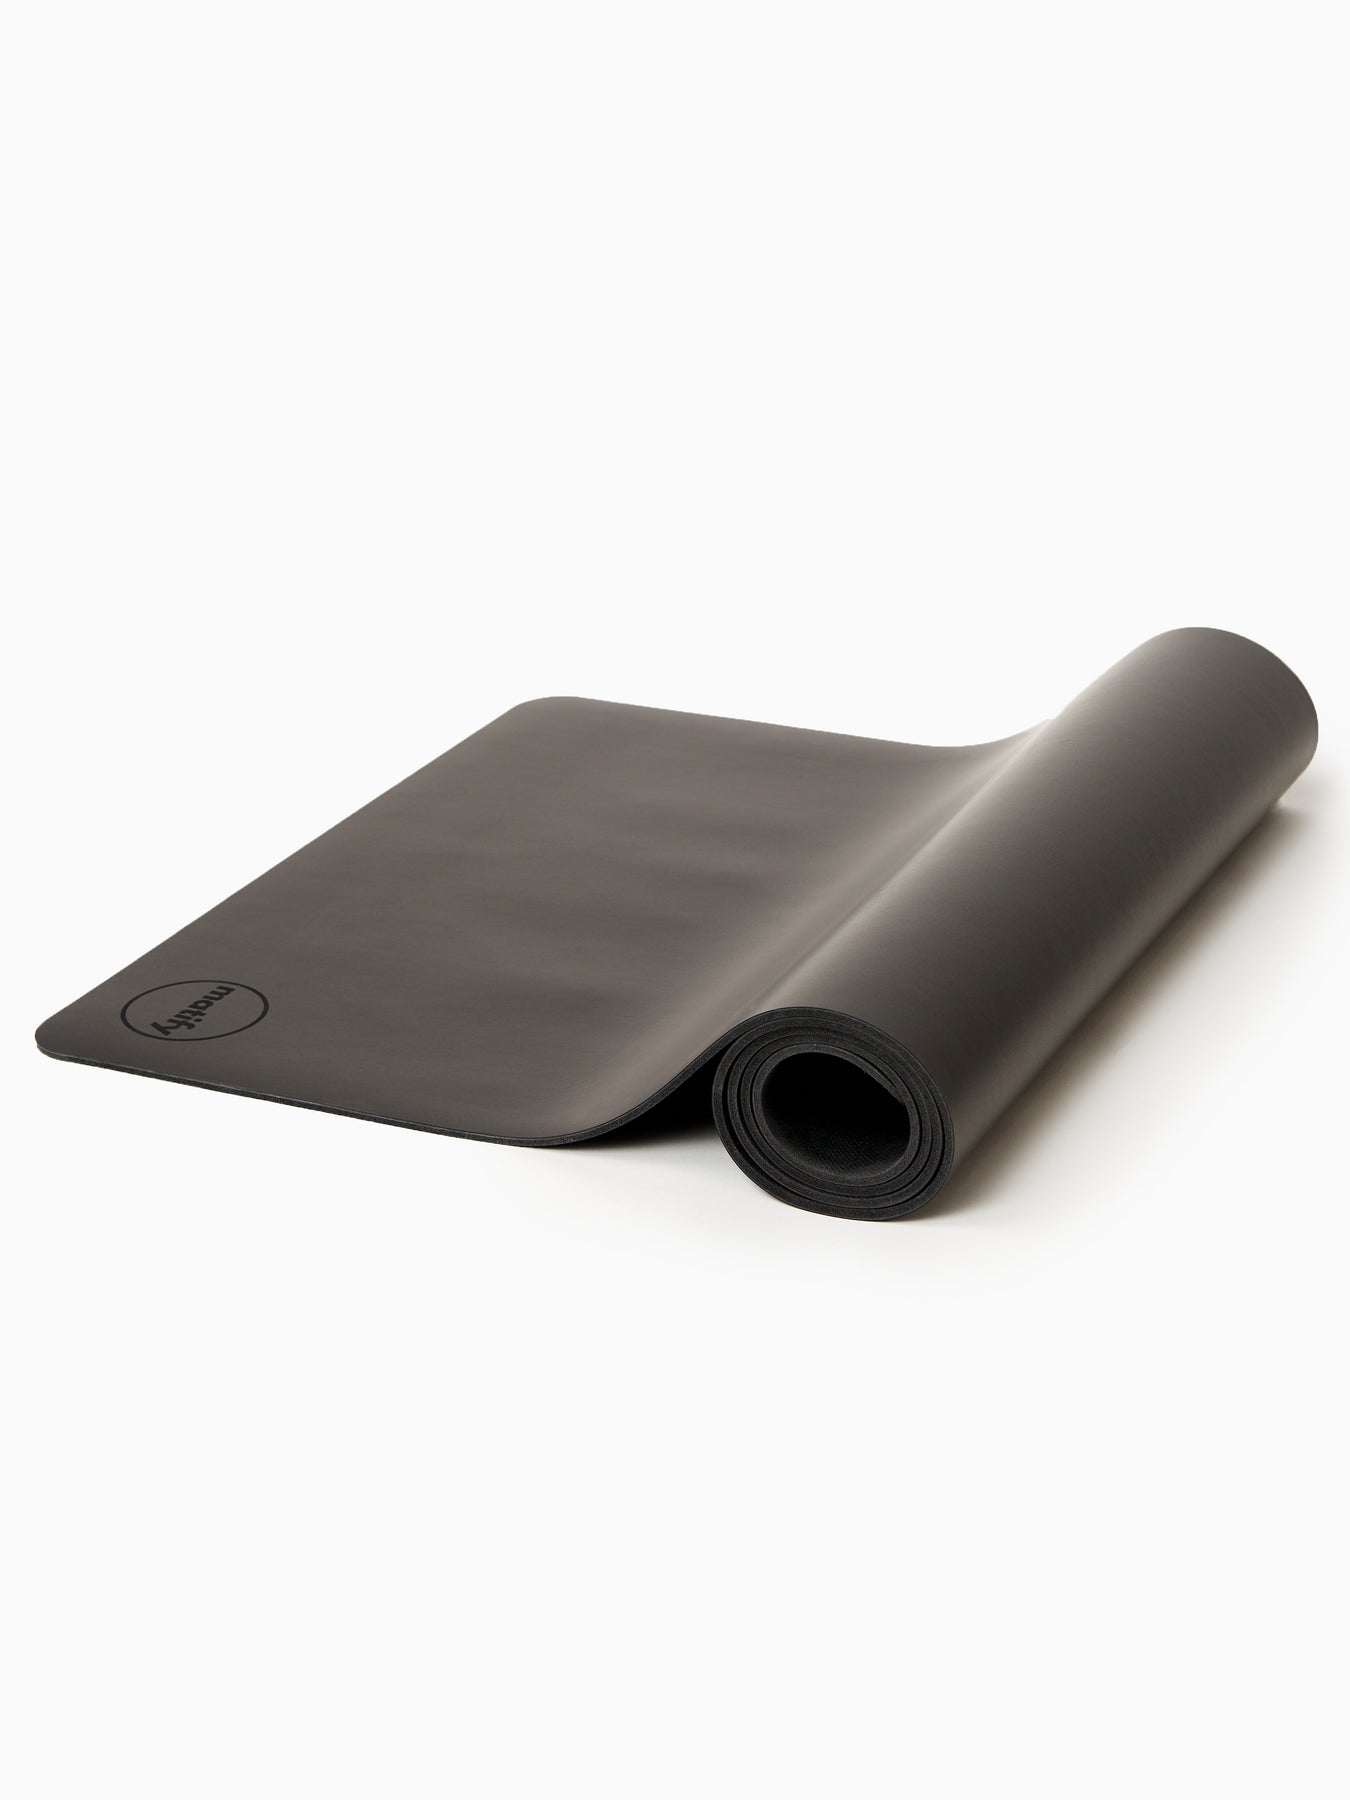 5mm Black mat – vibrosolution